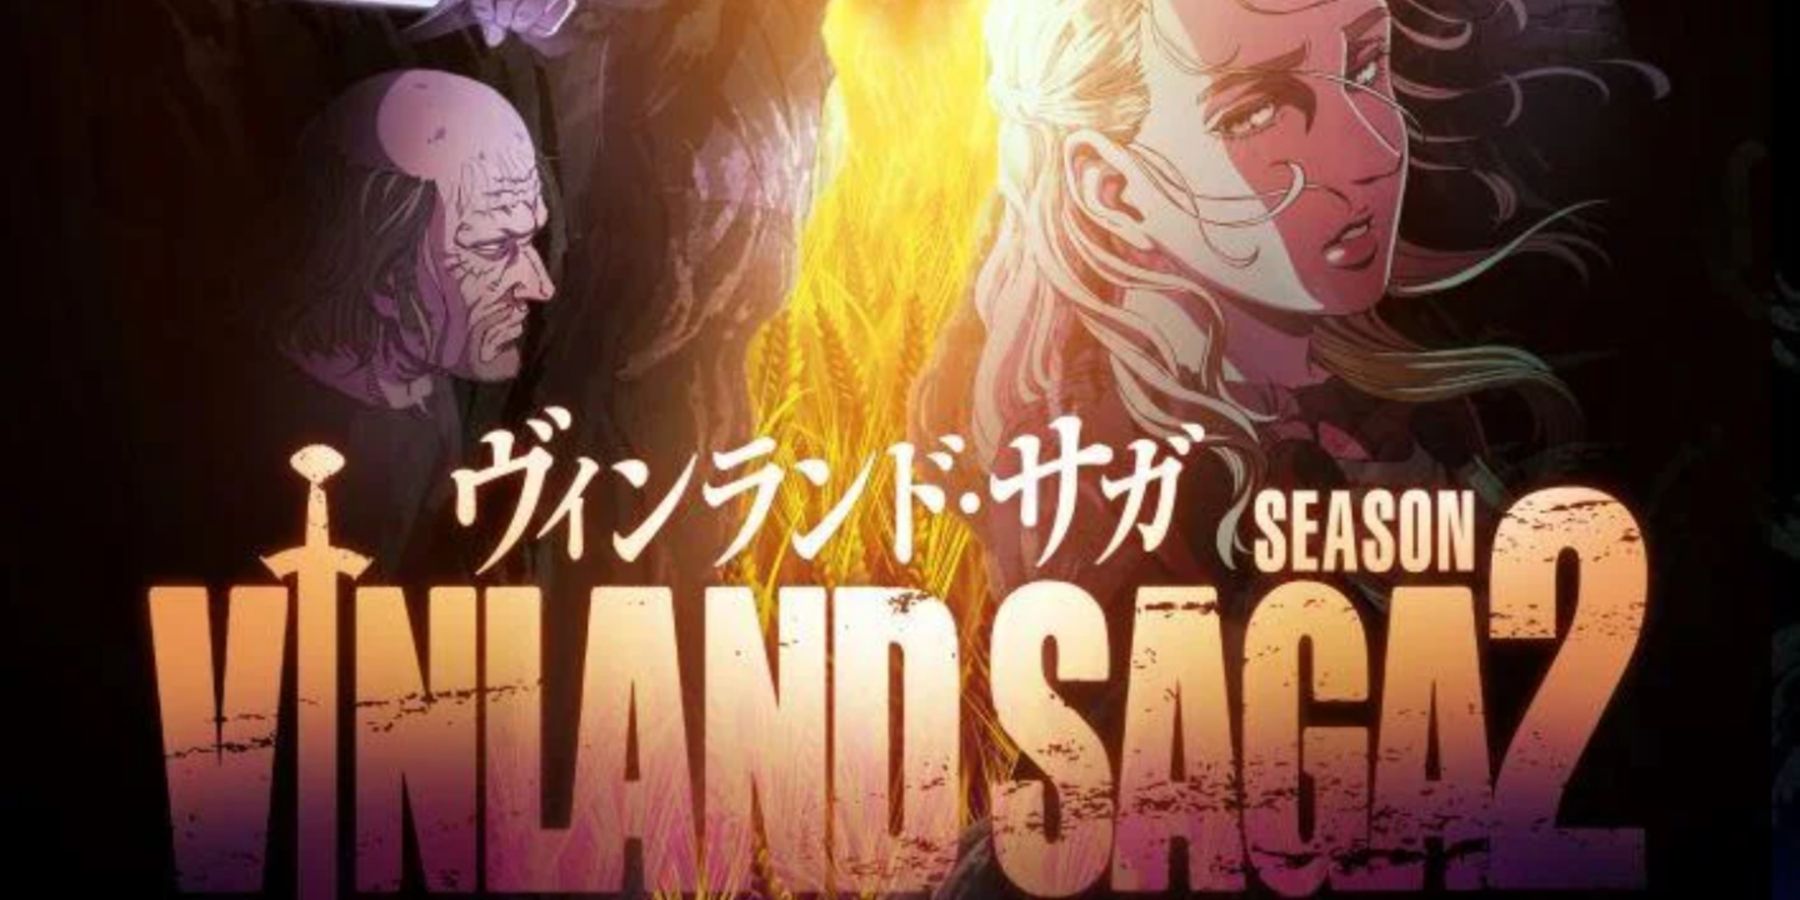 Vinland Saga Season 2 Release Date Confirmed